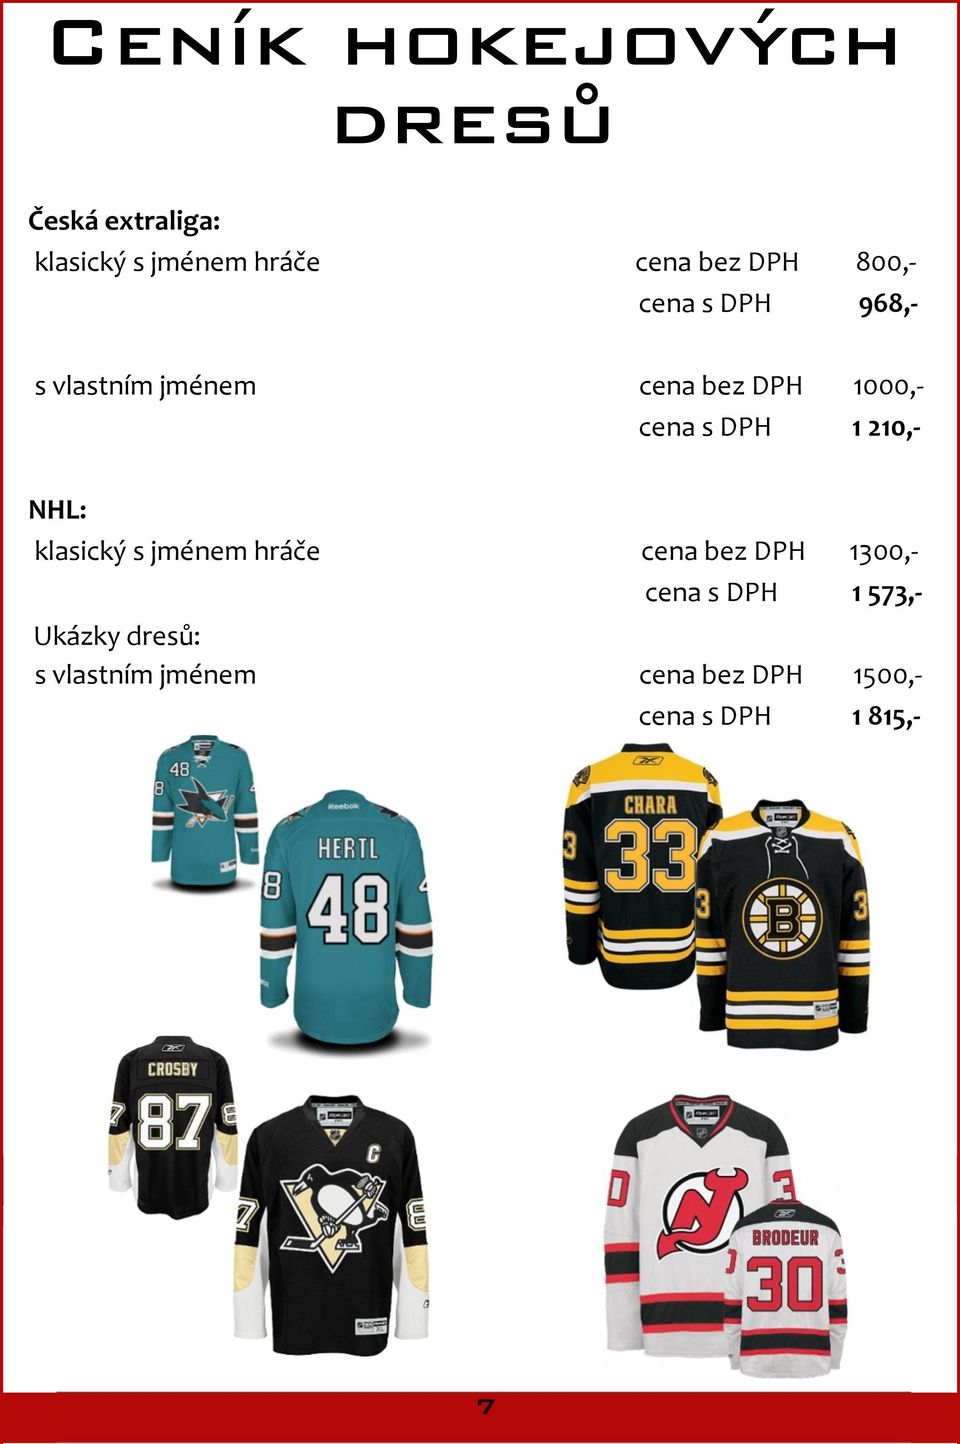 DPH 1210,- NHL: klasický s jménem hráče cena bez DPH 1300,- cena s DPH